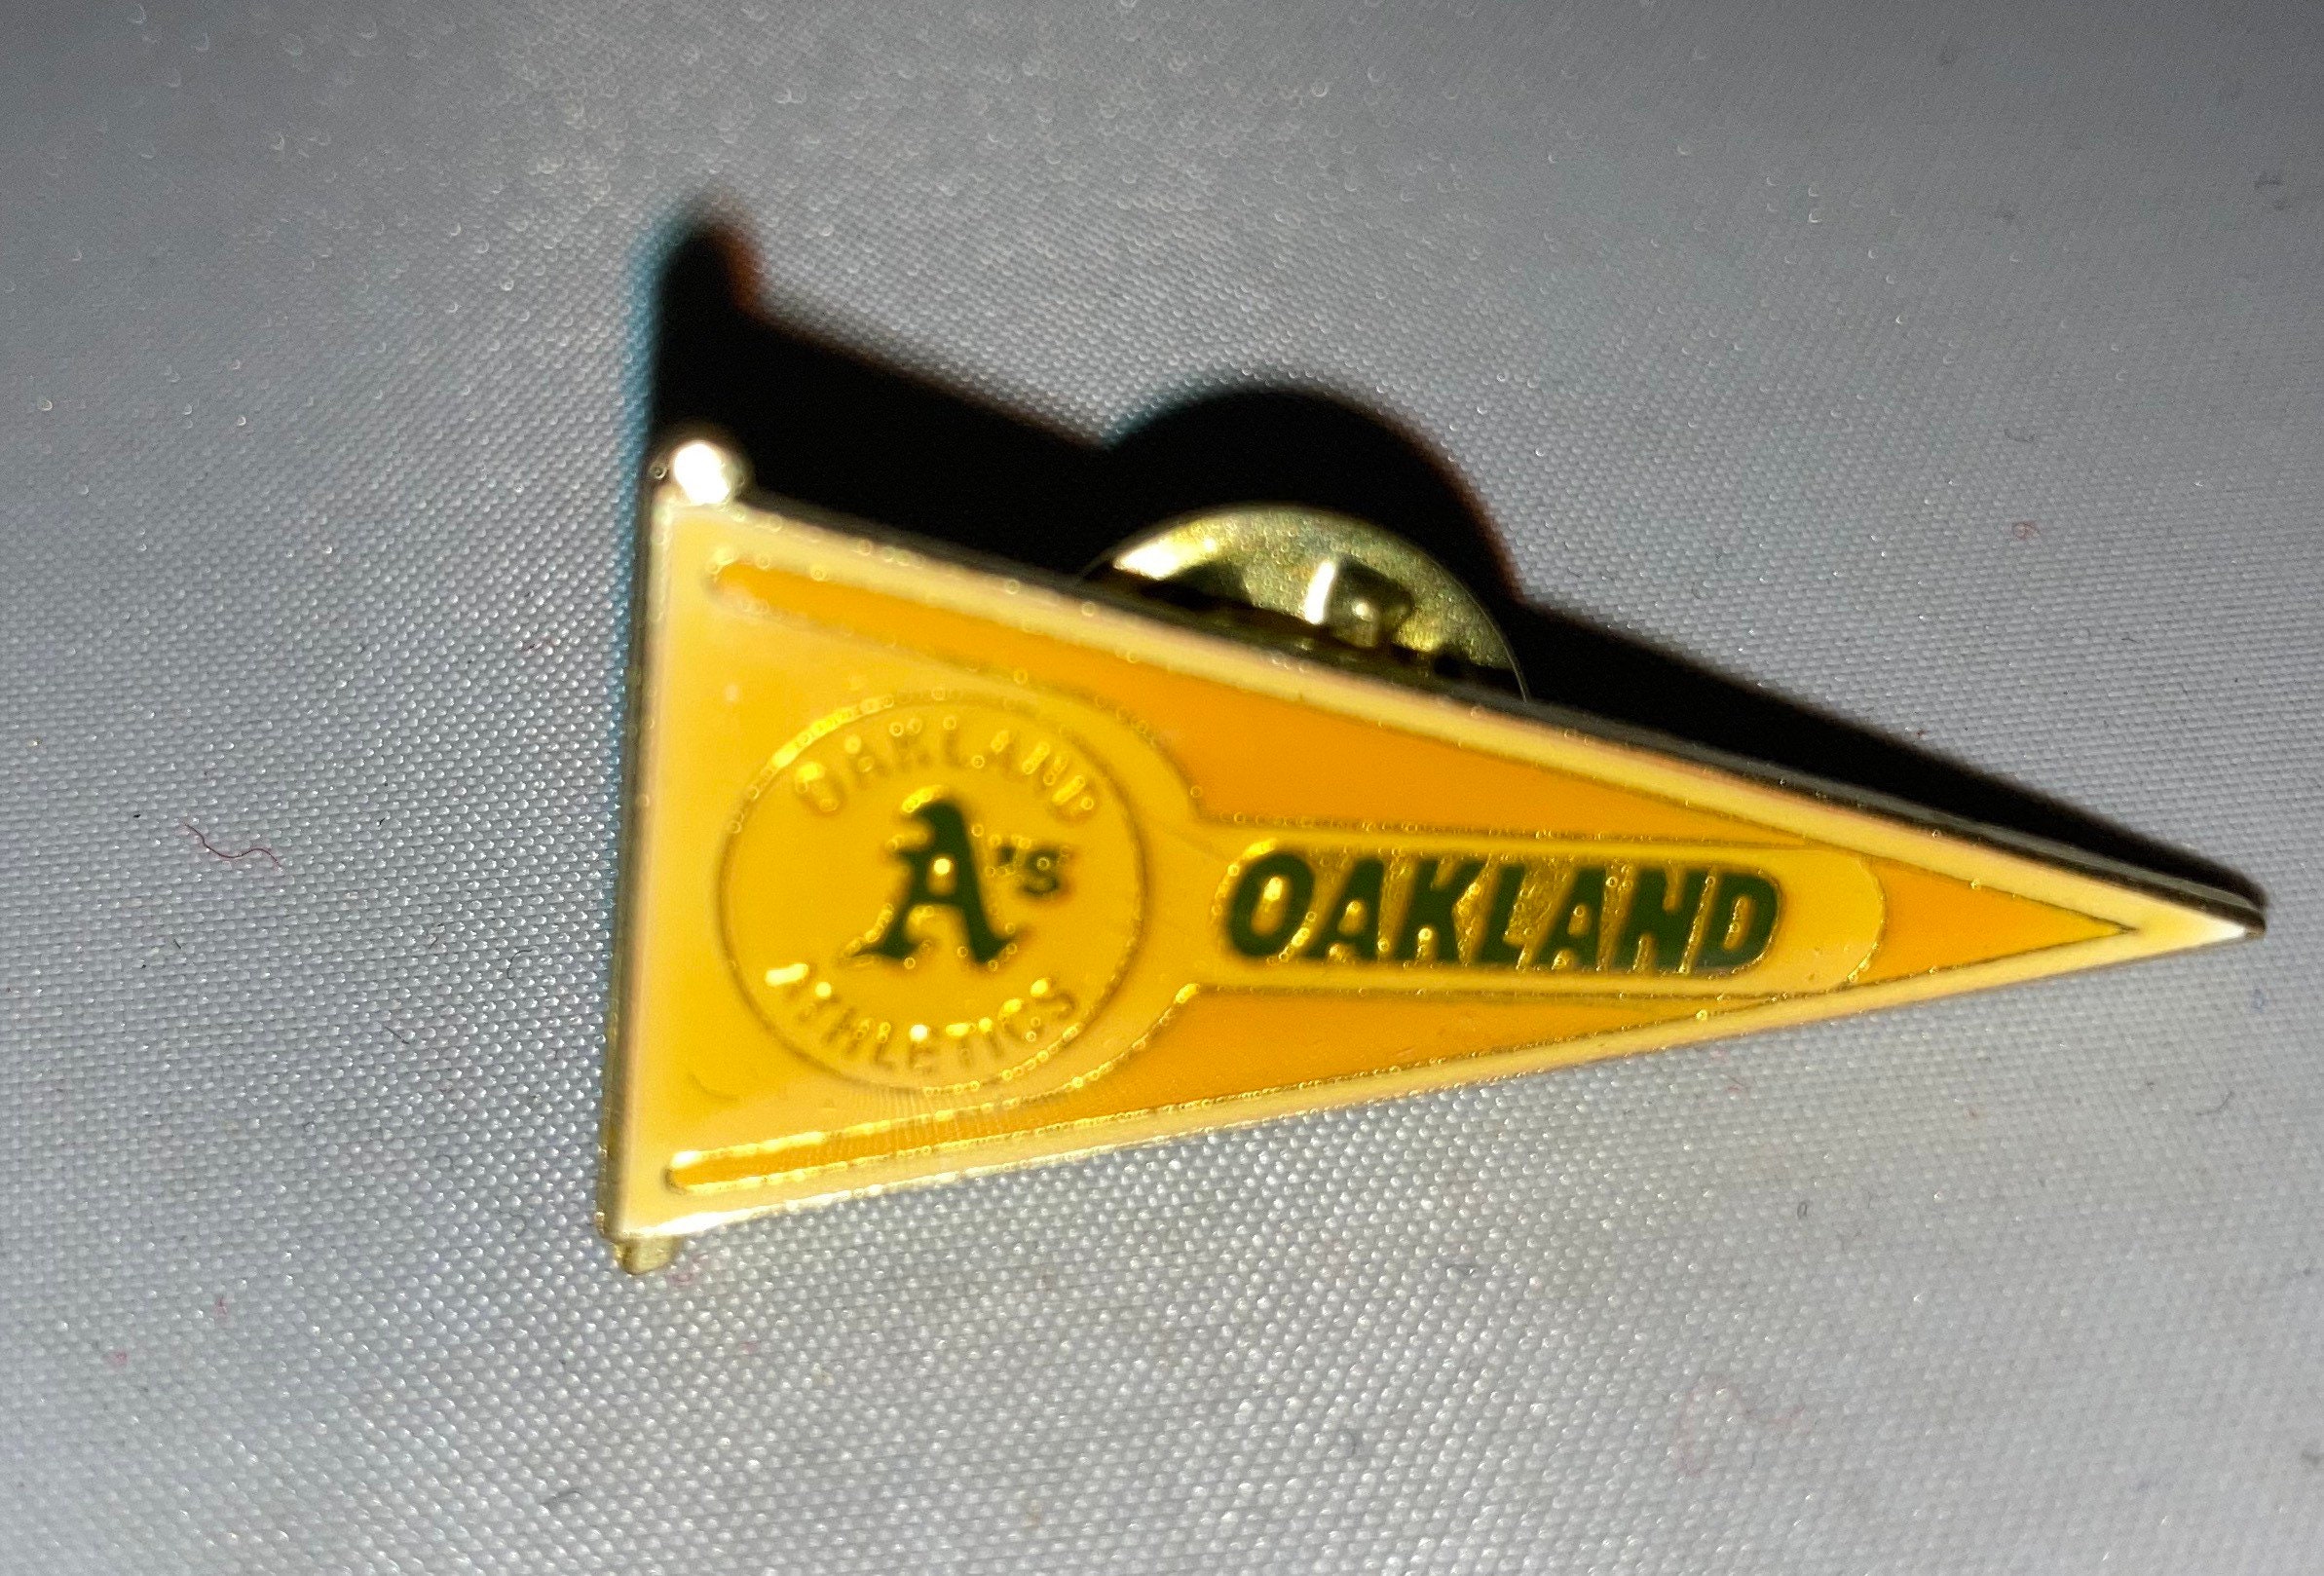 Pin on Oakland Athletics Dynasty